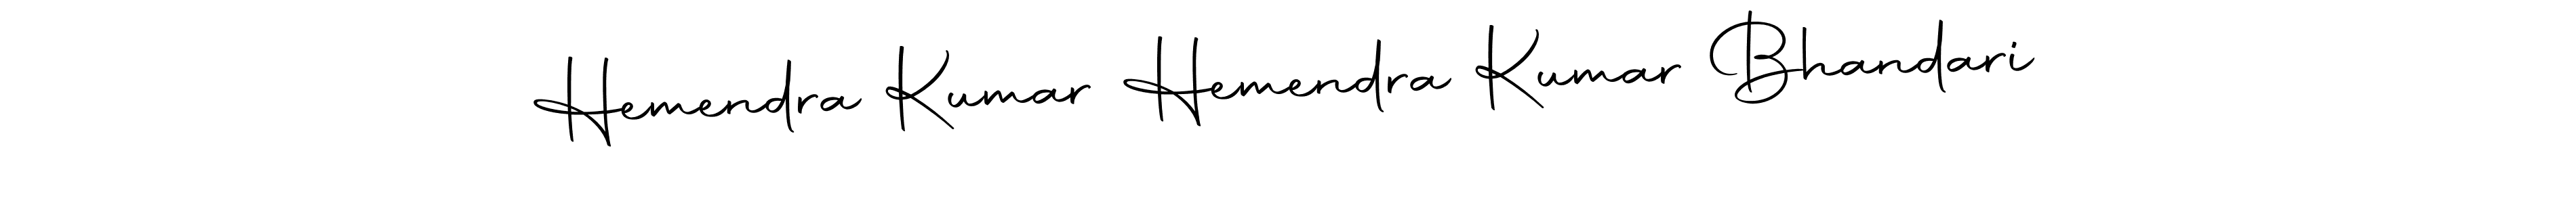 How to Draw Hemendra Kumar Hemendra Kumar Bhandari signature style? Autography-DOLnW is a latest design signature styles for name Hemendra Kumar Hemendra Kumar Bhandari. Hemendra Kumar Hemendra Kumar Bhandari signature style 10 images and pictures png